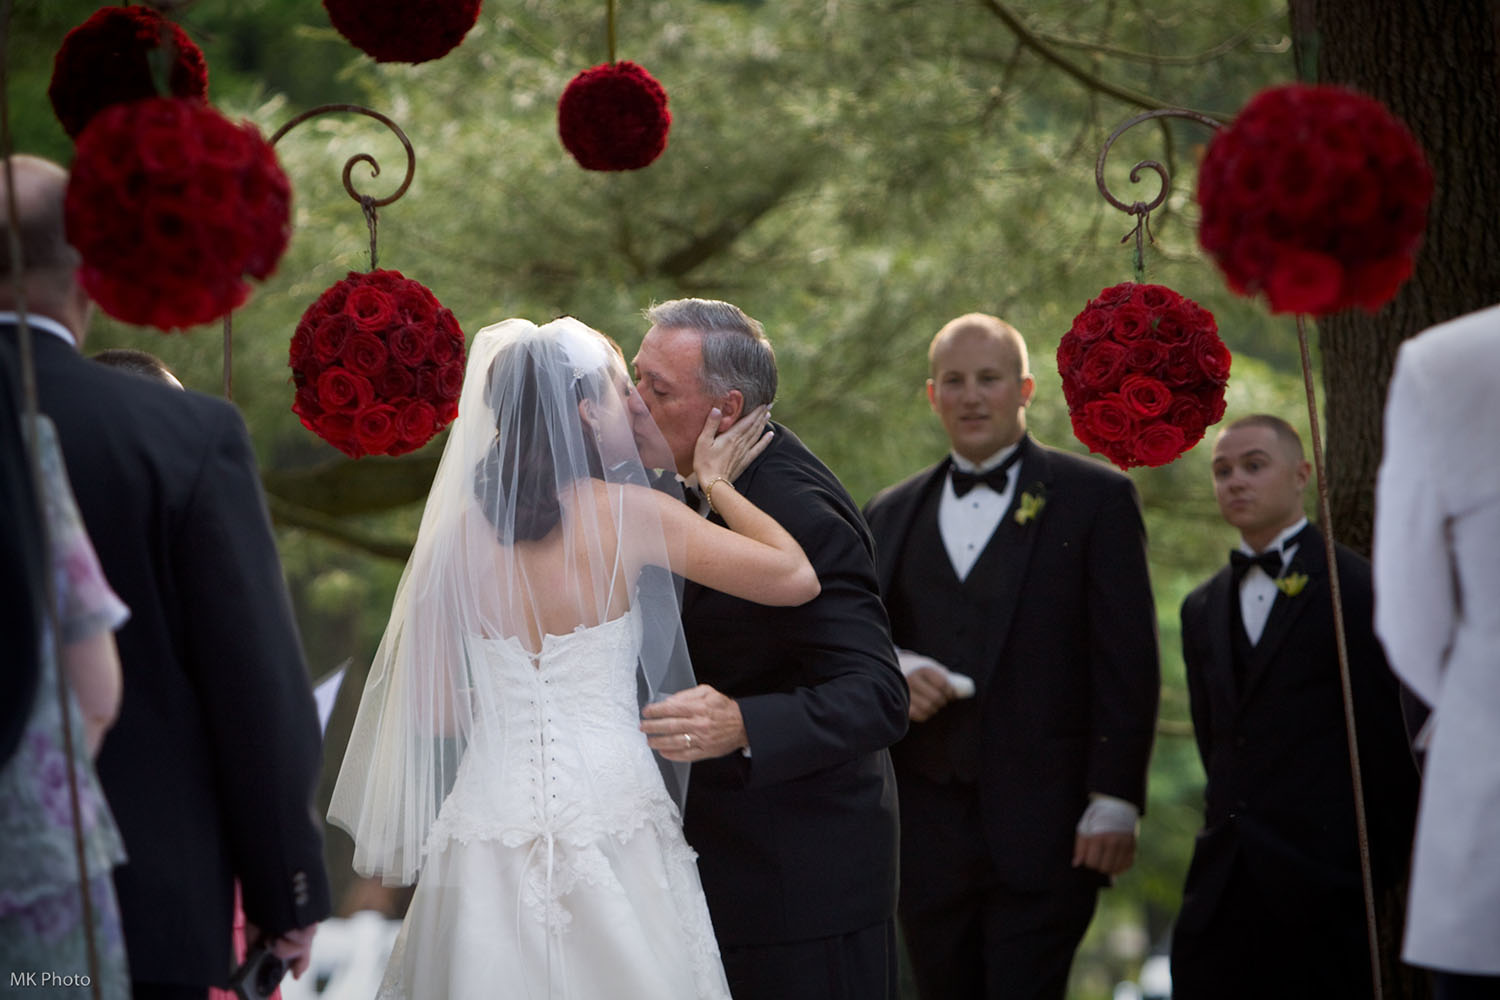   MK Photography &nbsp;&nbsp;| &nbsp;Wedding Ceremony &nbsp;| &nbsp;Farm in Glen Mills, PA 